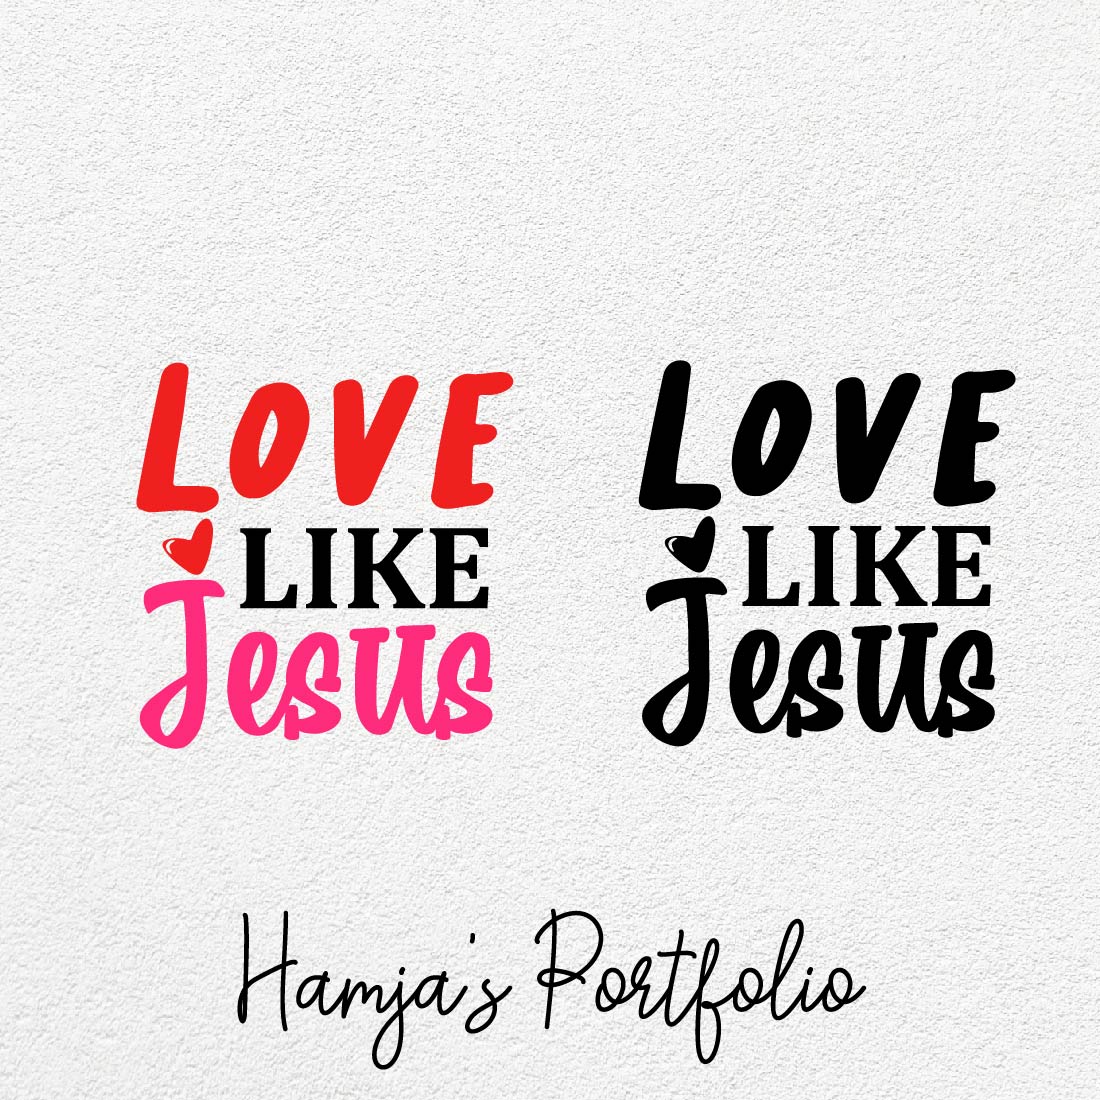 Love Like Jesus Vector Svg cover image.